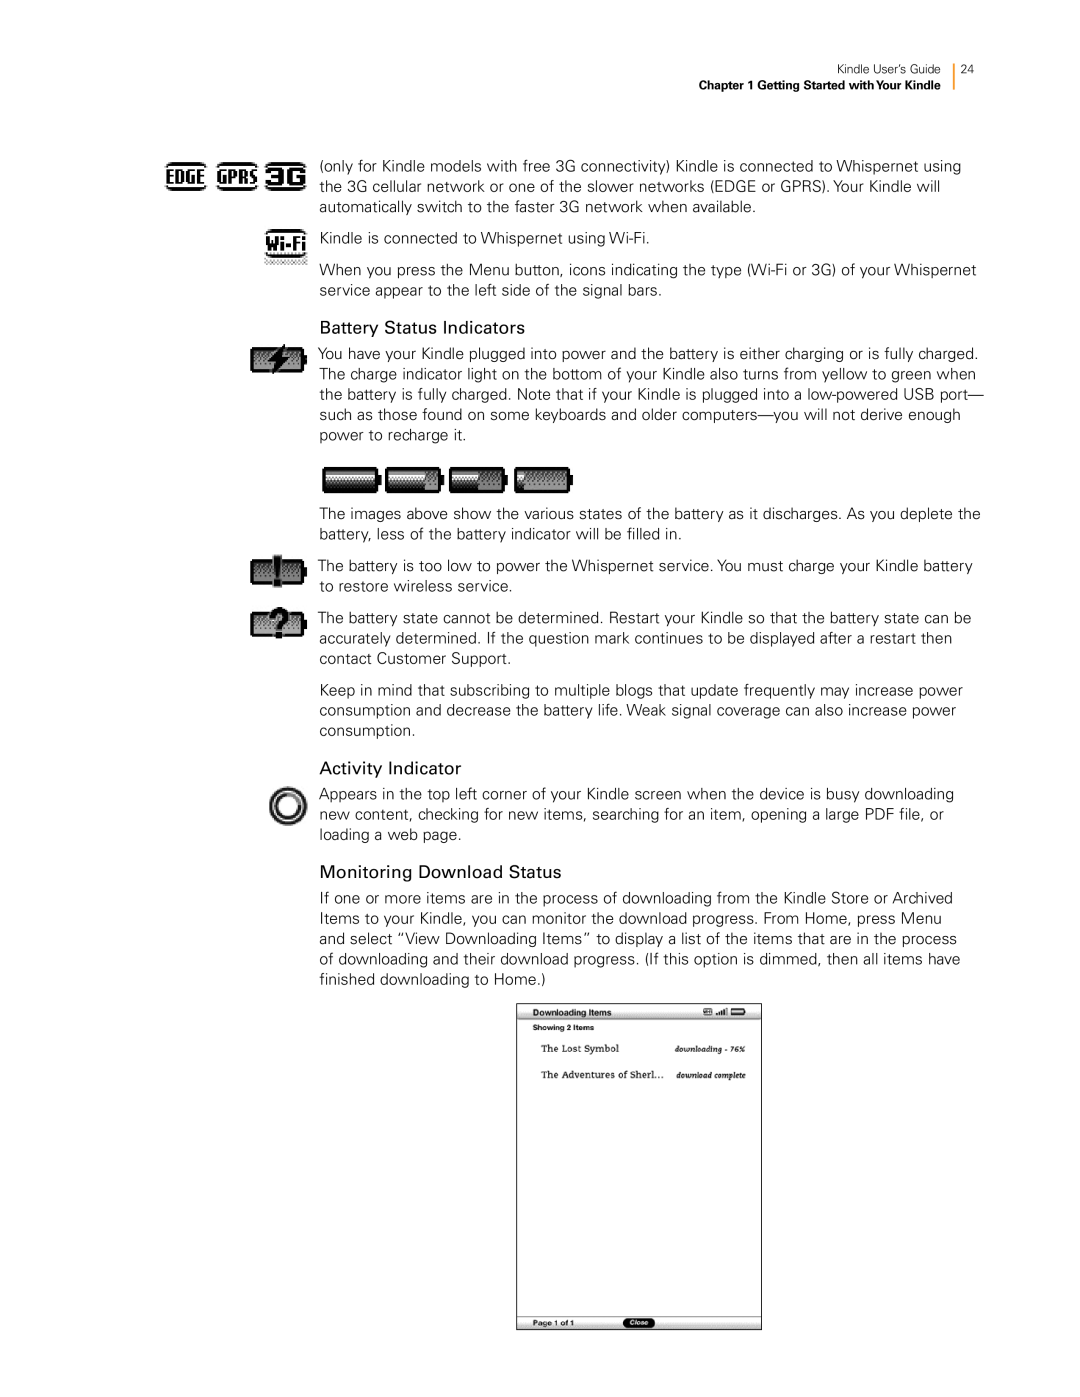 Amazon KNDKYBRD3G manual Battery Status Indicators, Activity Indicator, Monitoring Download Status 